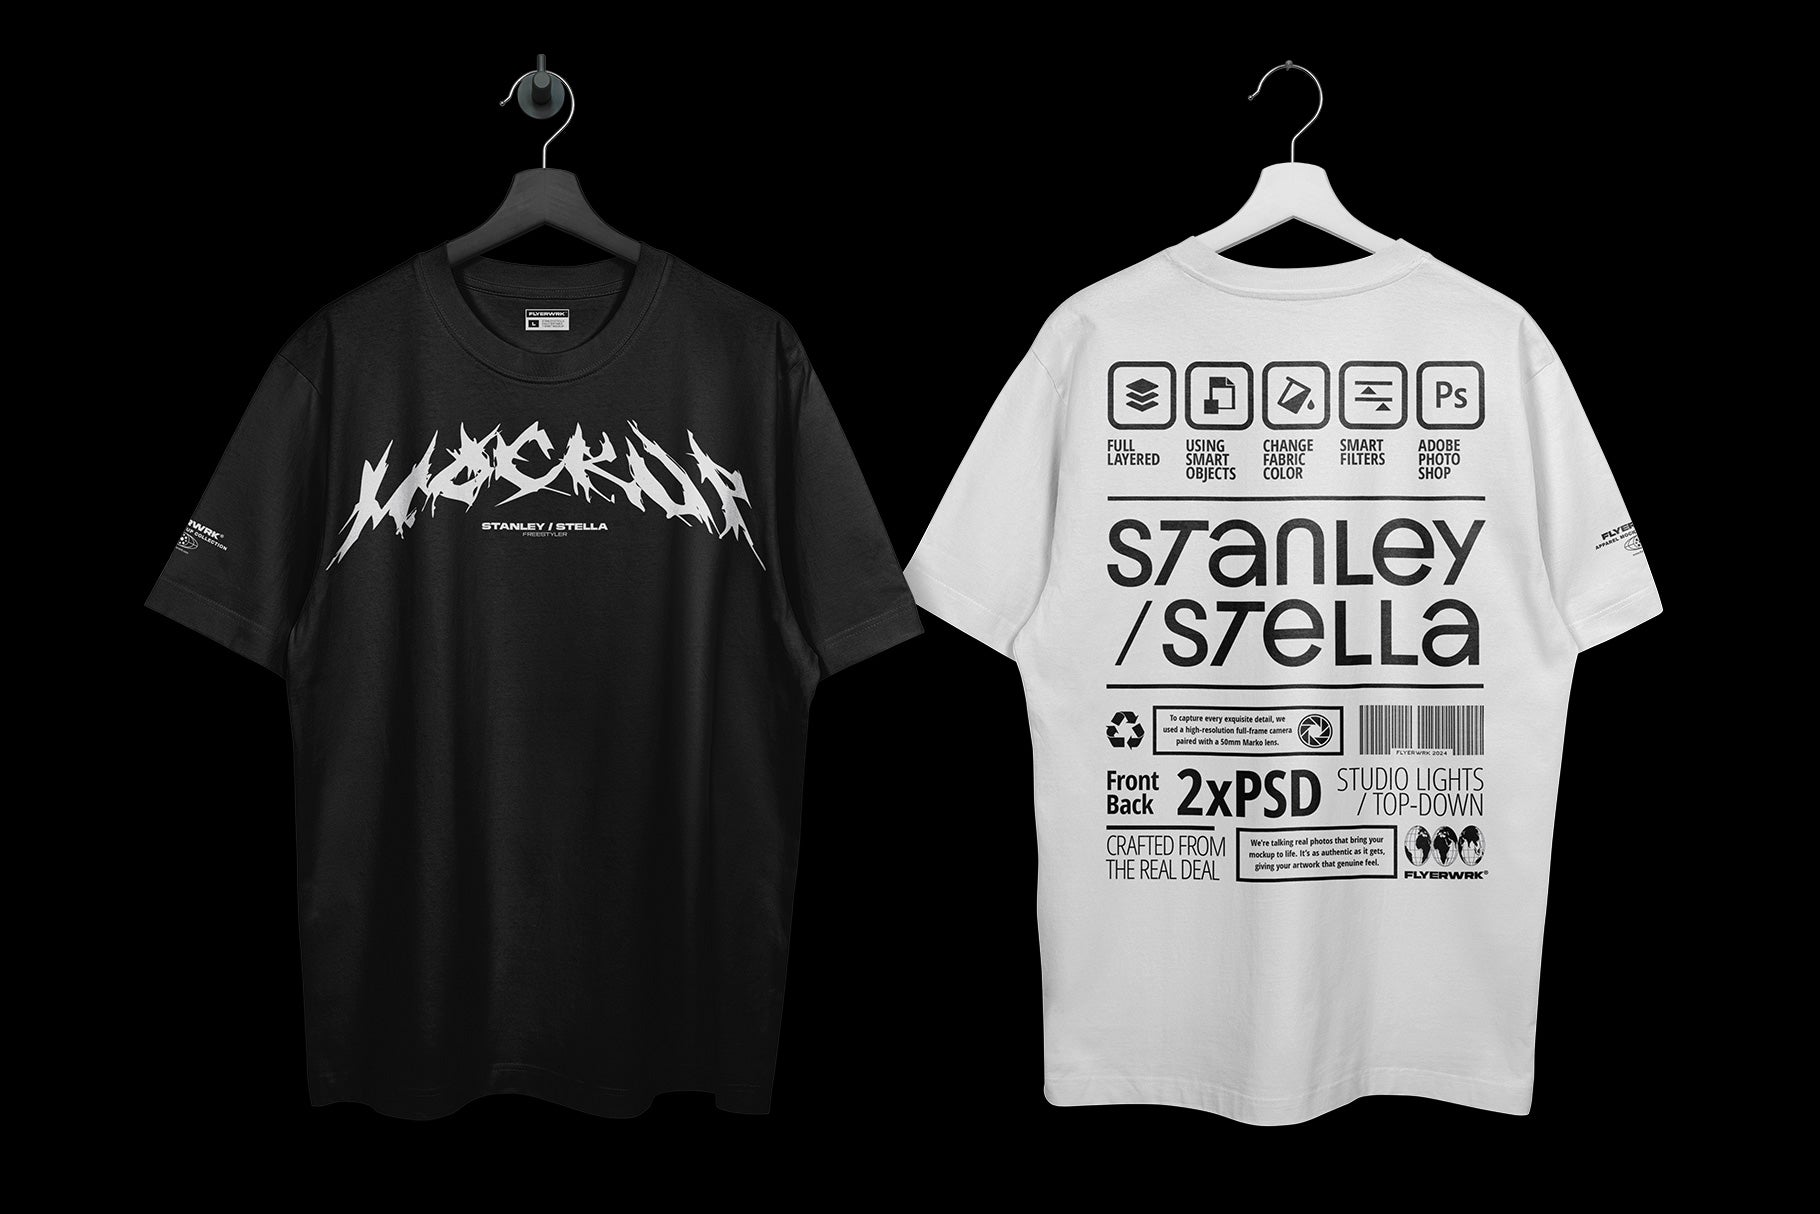 Stanley Stella T-shirt Mockup - Hanging